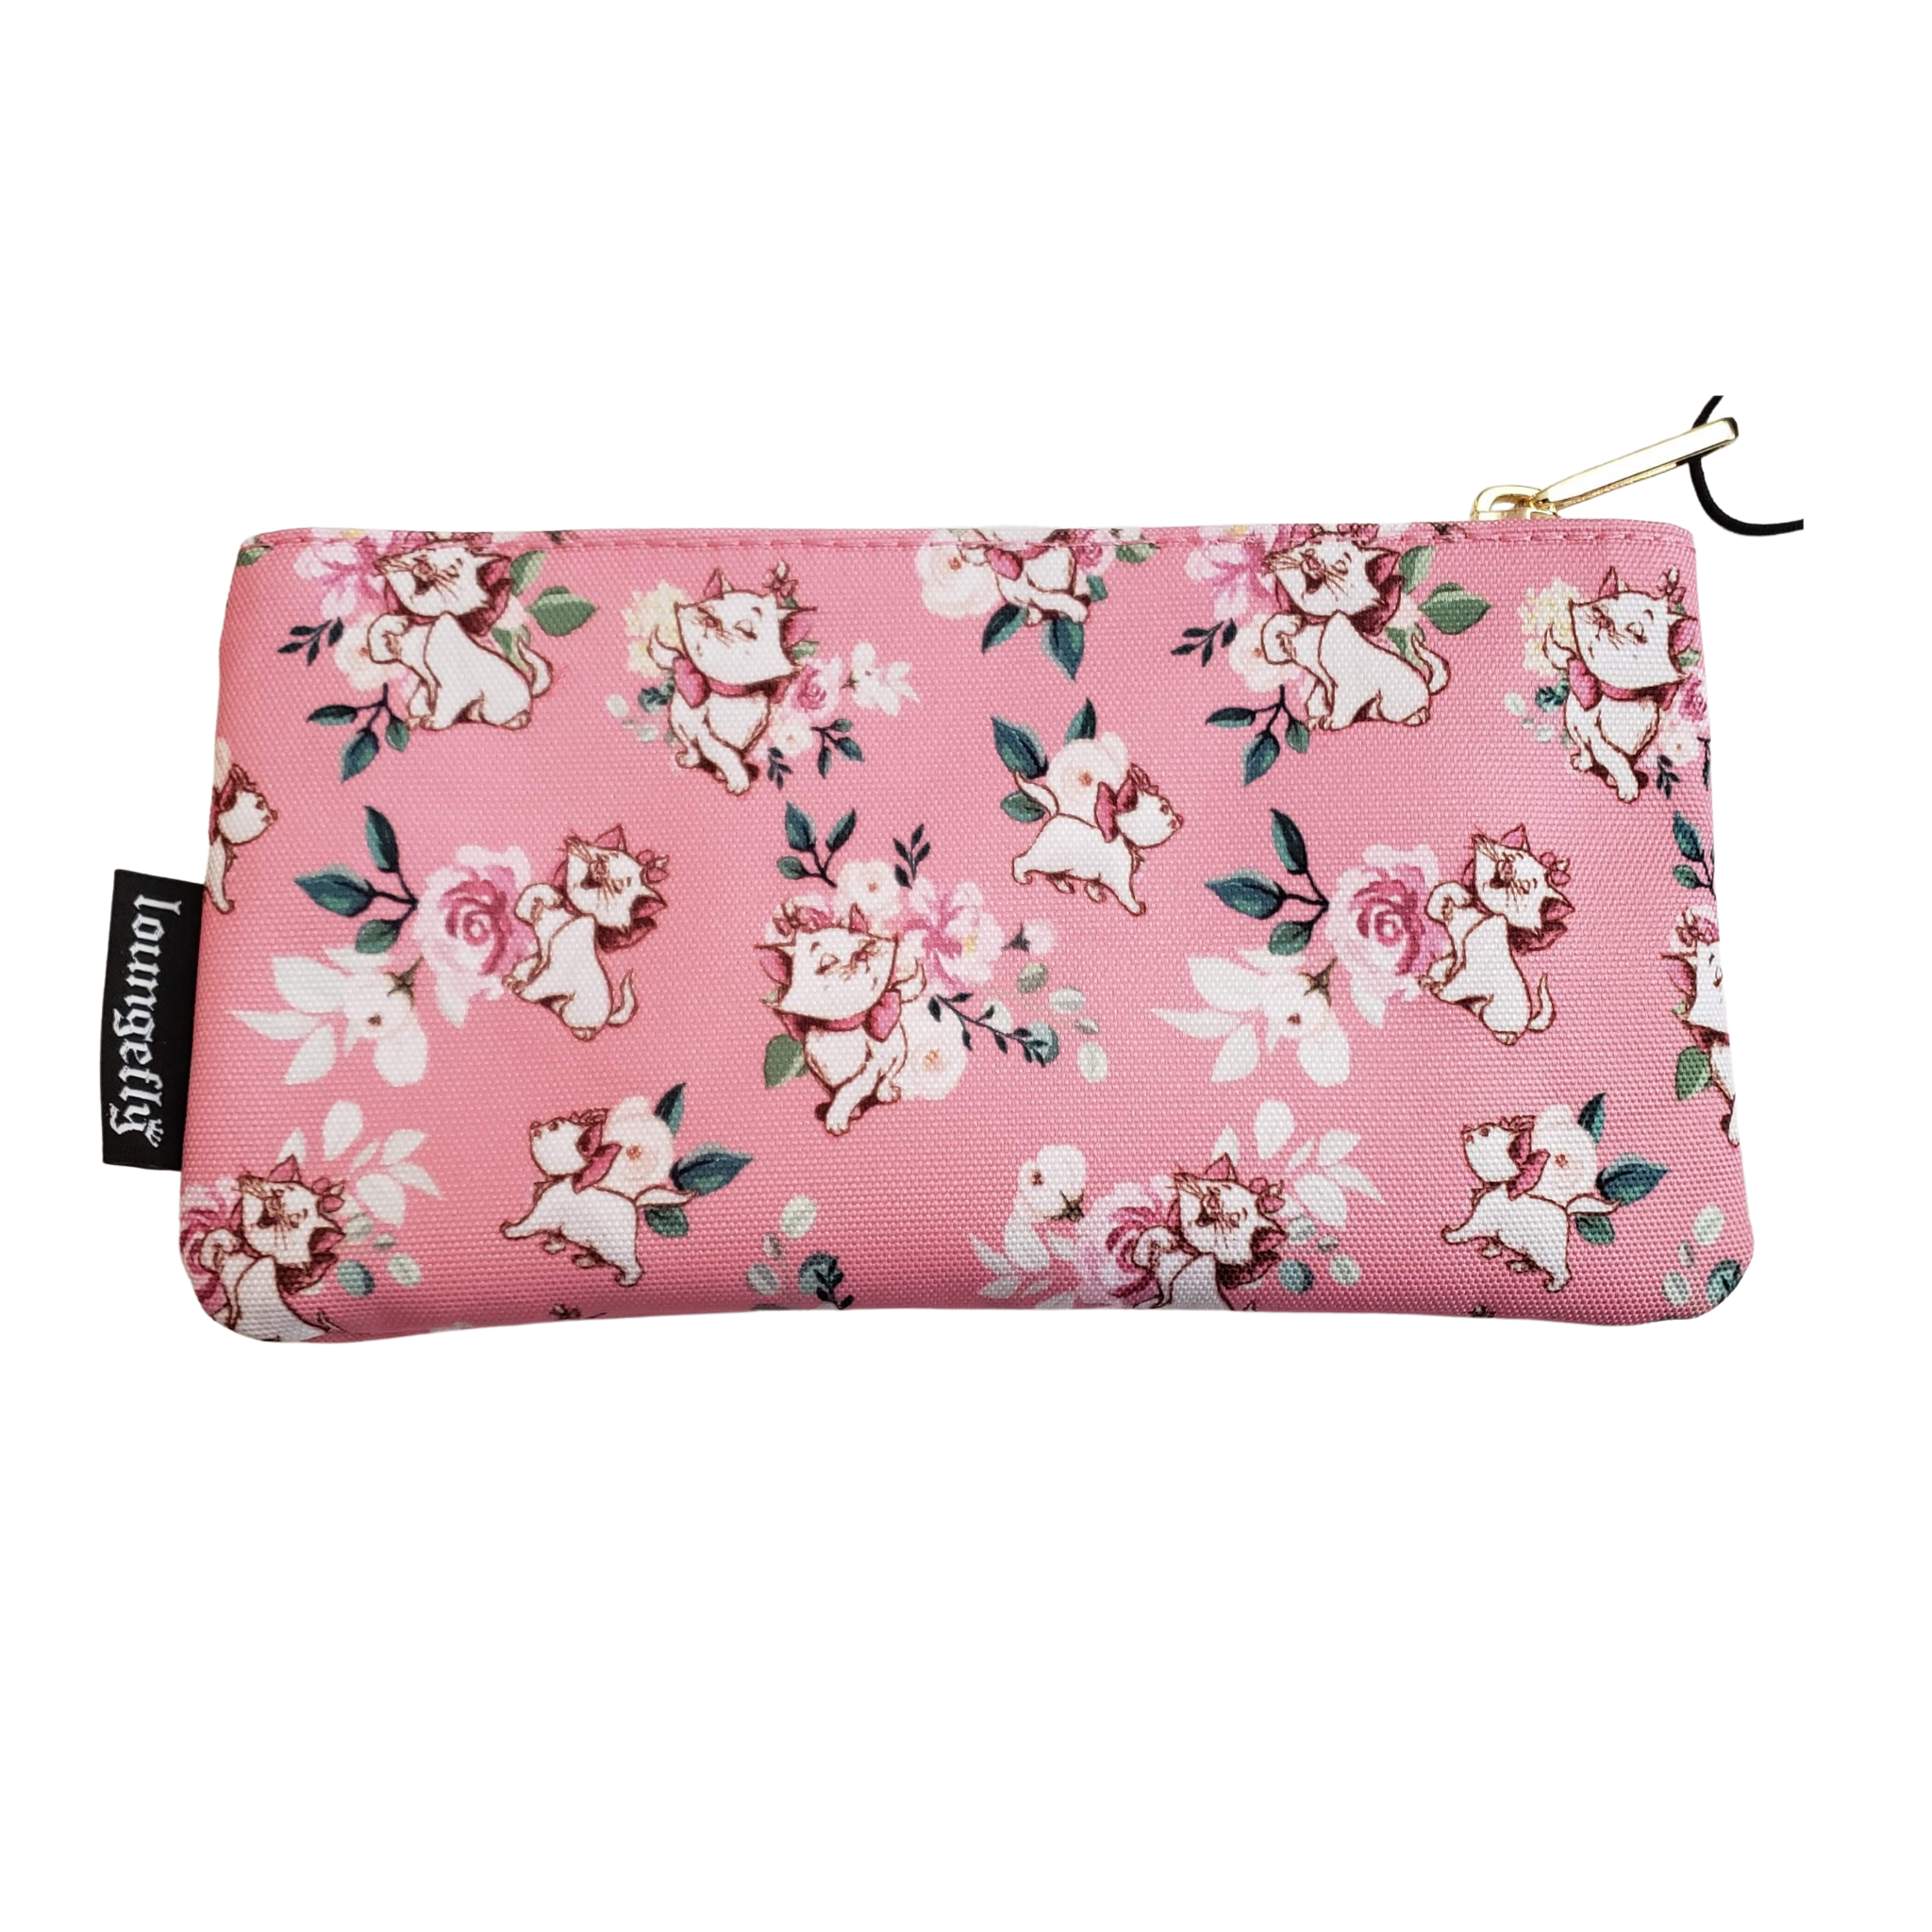 Loungefly Disney Princess Sidekicks Rose Pink Checkered AOP Flap Wallet -  Merchoid